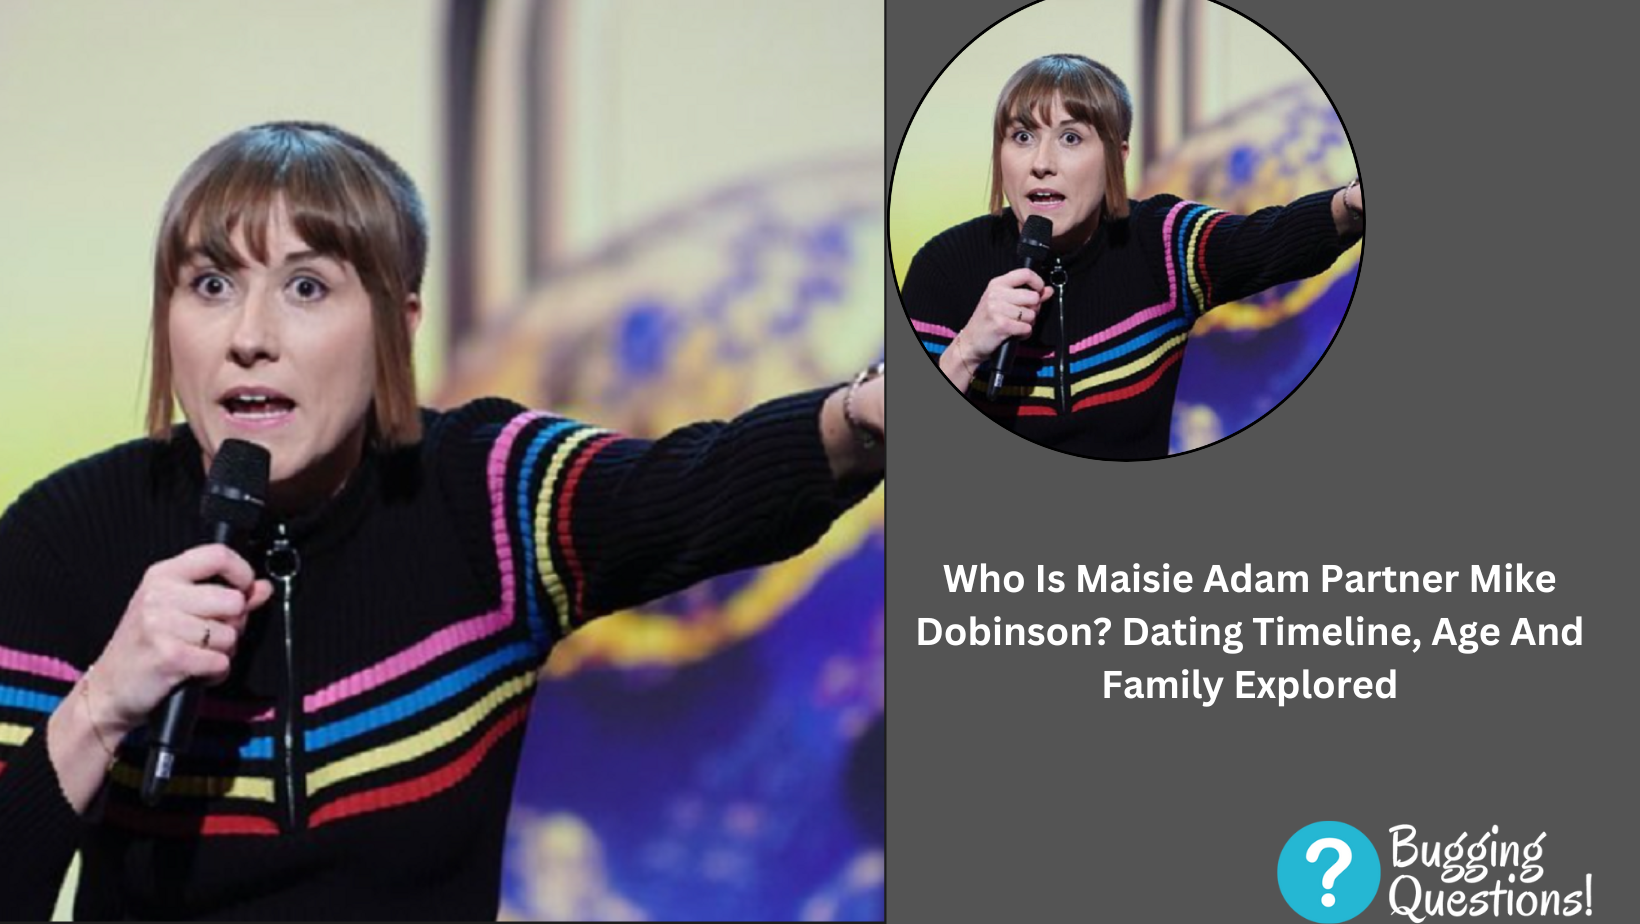 Who Is Maisie Adam Partner Mike Dobinson?